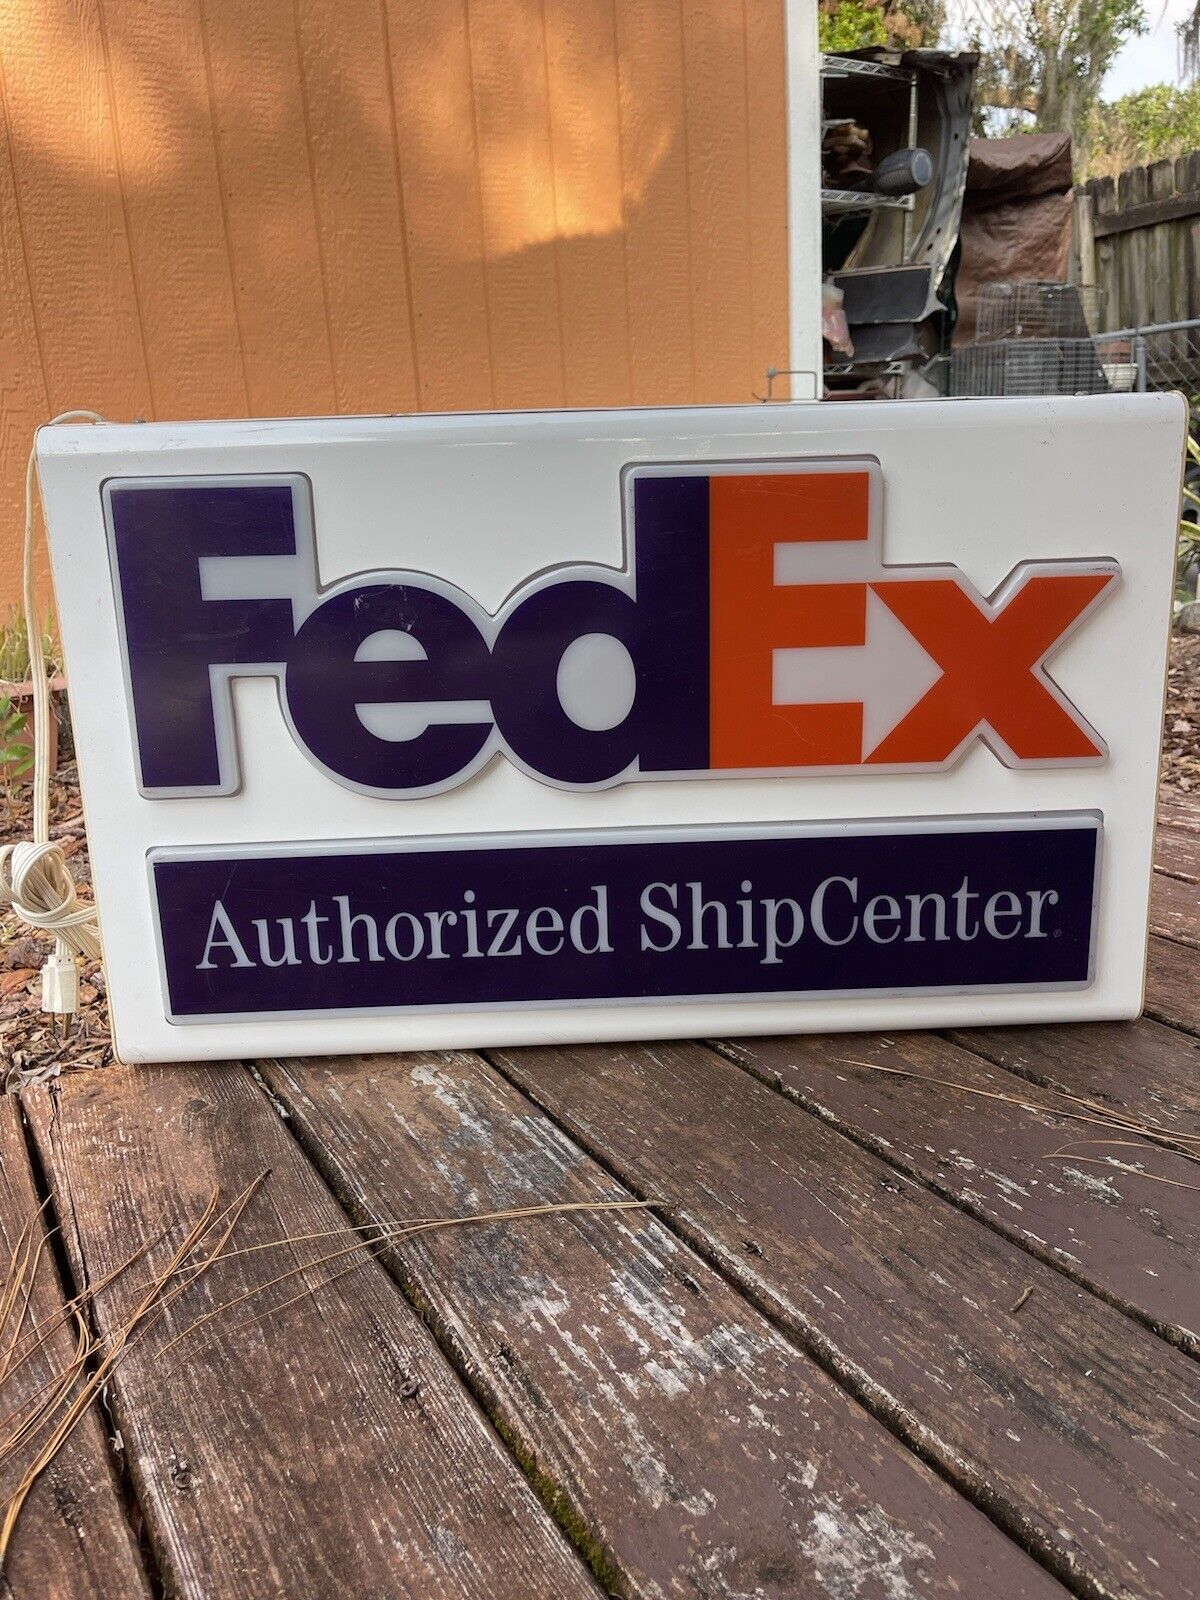 FedEx Authorized Ship Center Lighted Display Sign 28”x19”x4” Purple Orange White